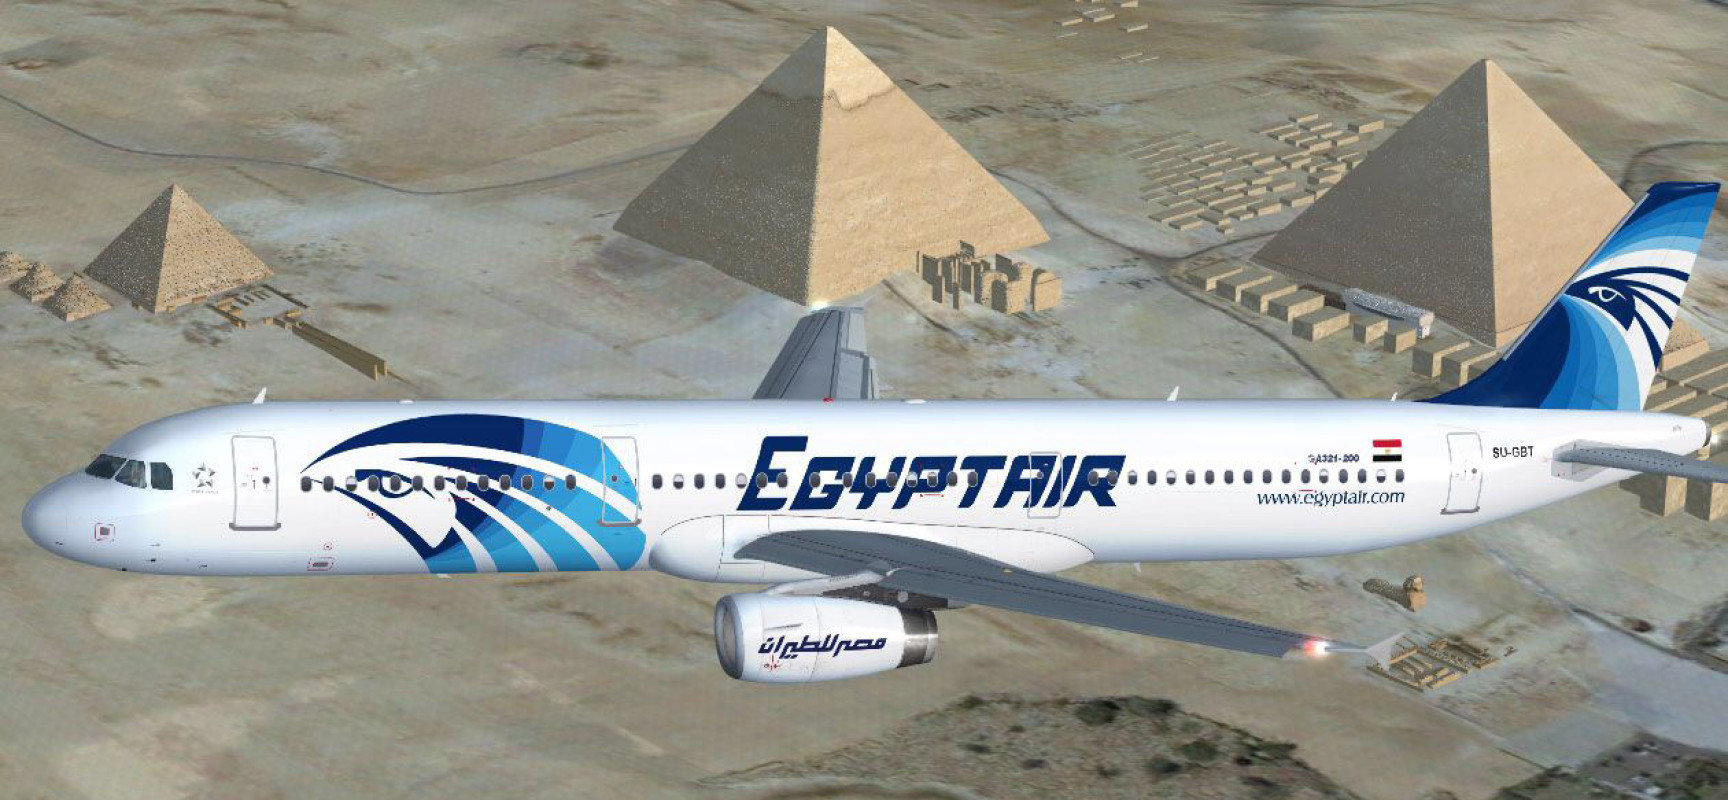 Avion de ligne EgytpAir